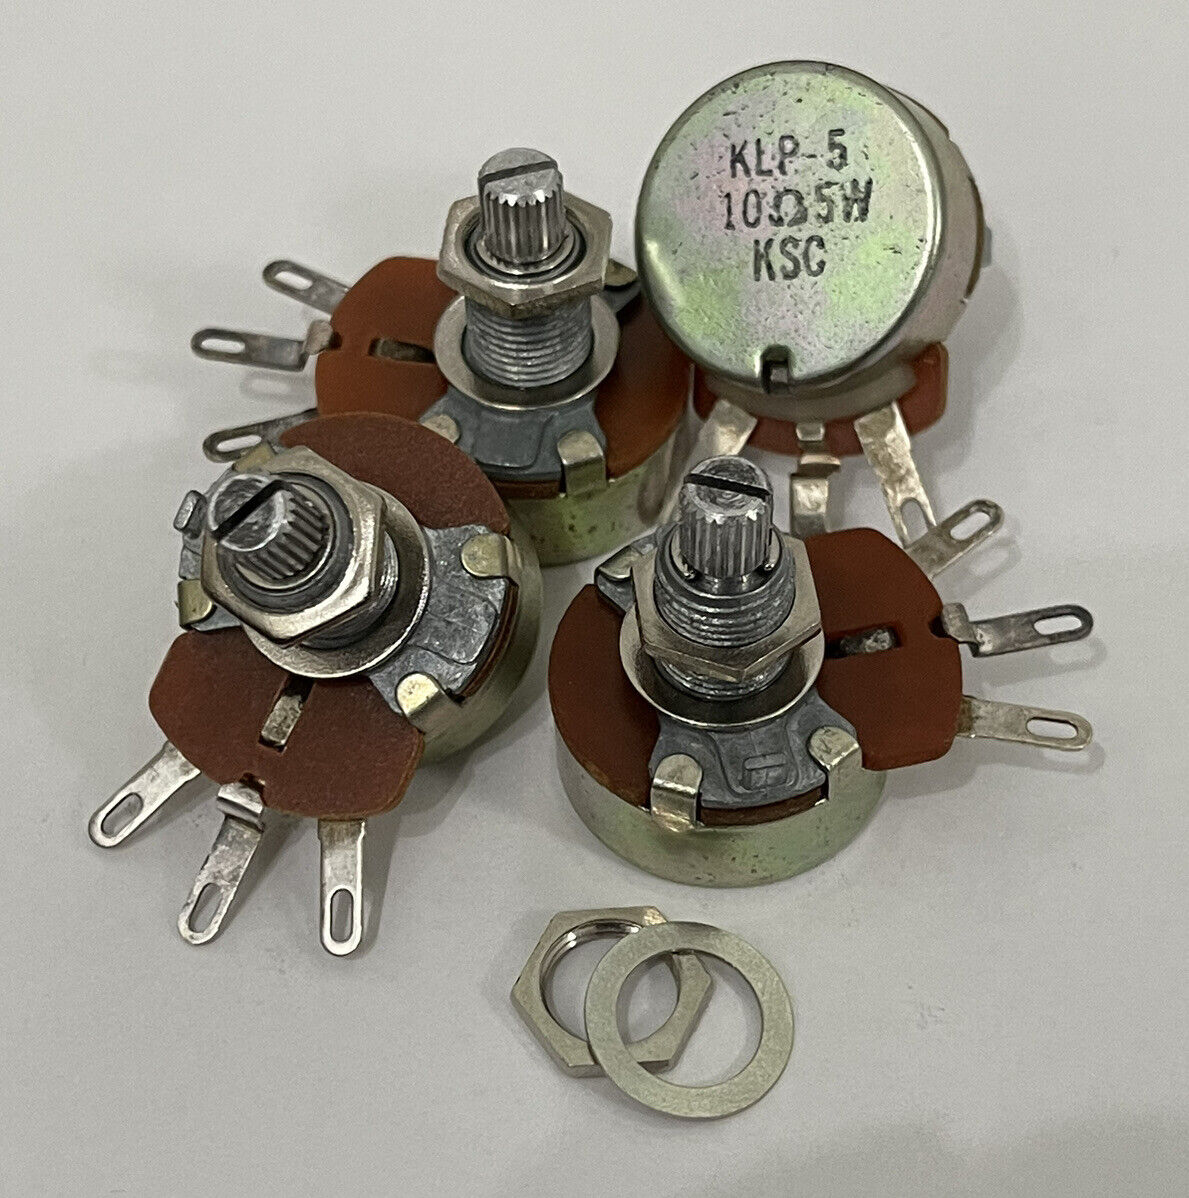 8 pcs. 10 ohm 5 watt NOS wire-wound linear potentiometers - NEED WORK KSC Industries - фотография #2